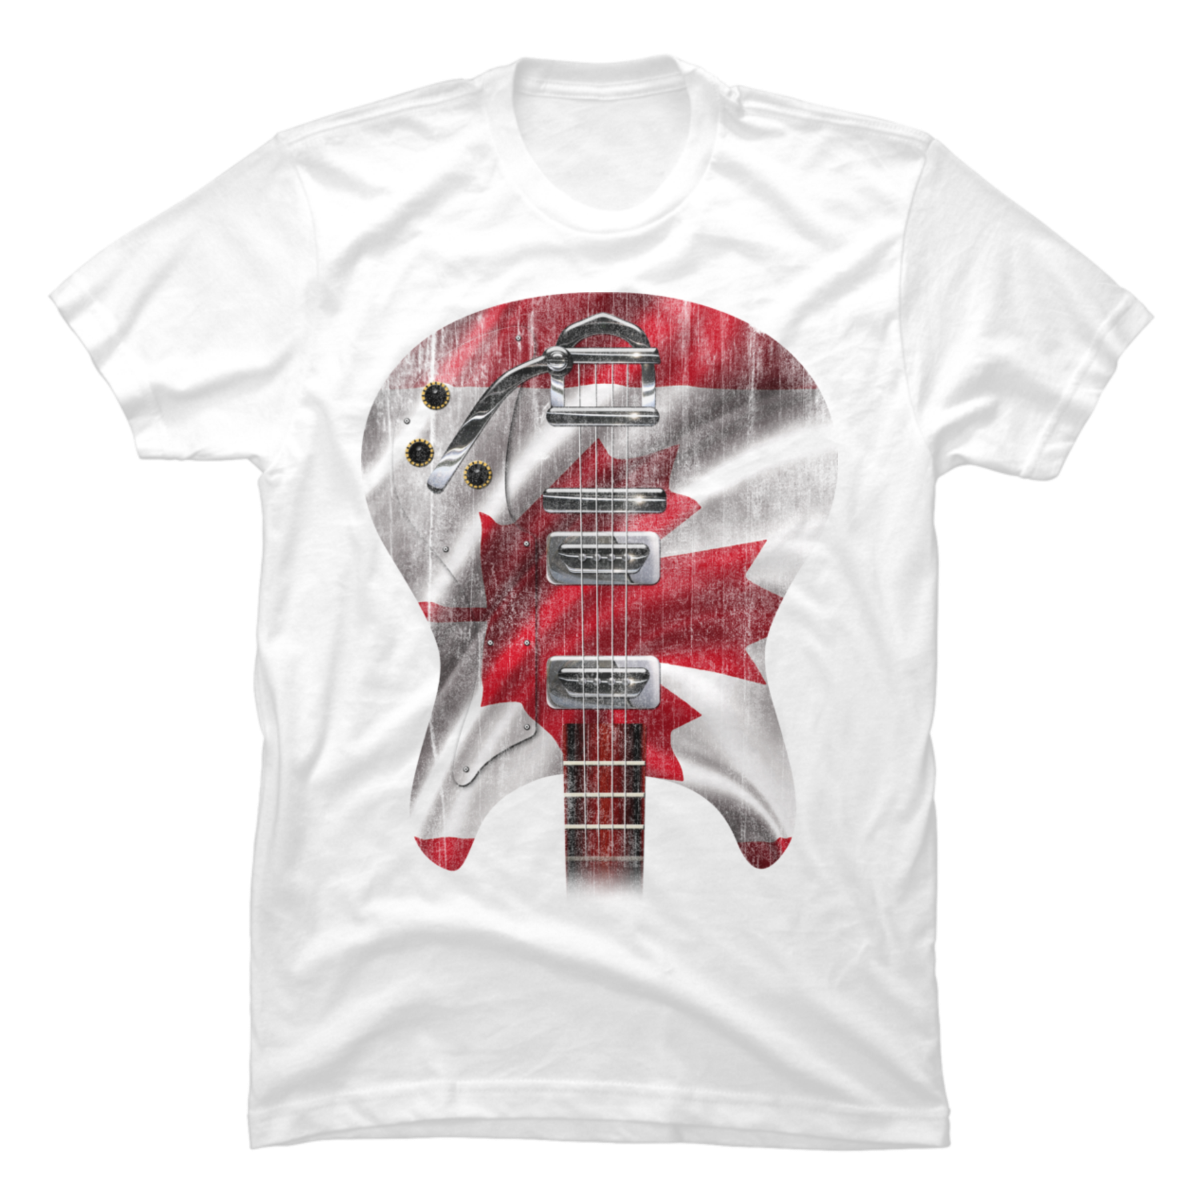 Guitar Body FlagT Canada - Buy t-shirt designs